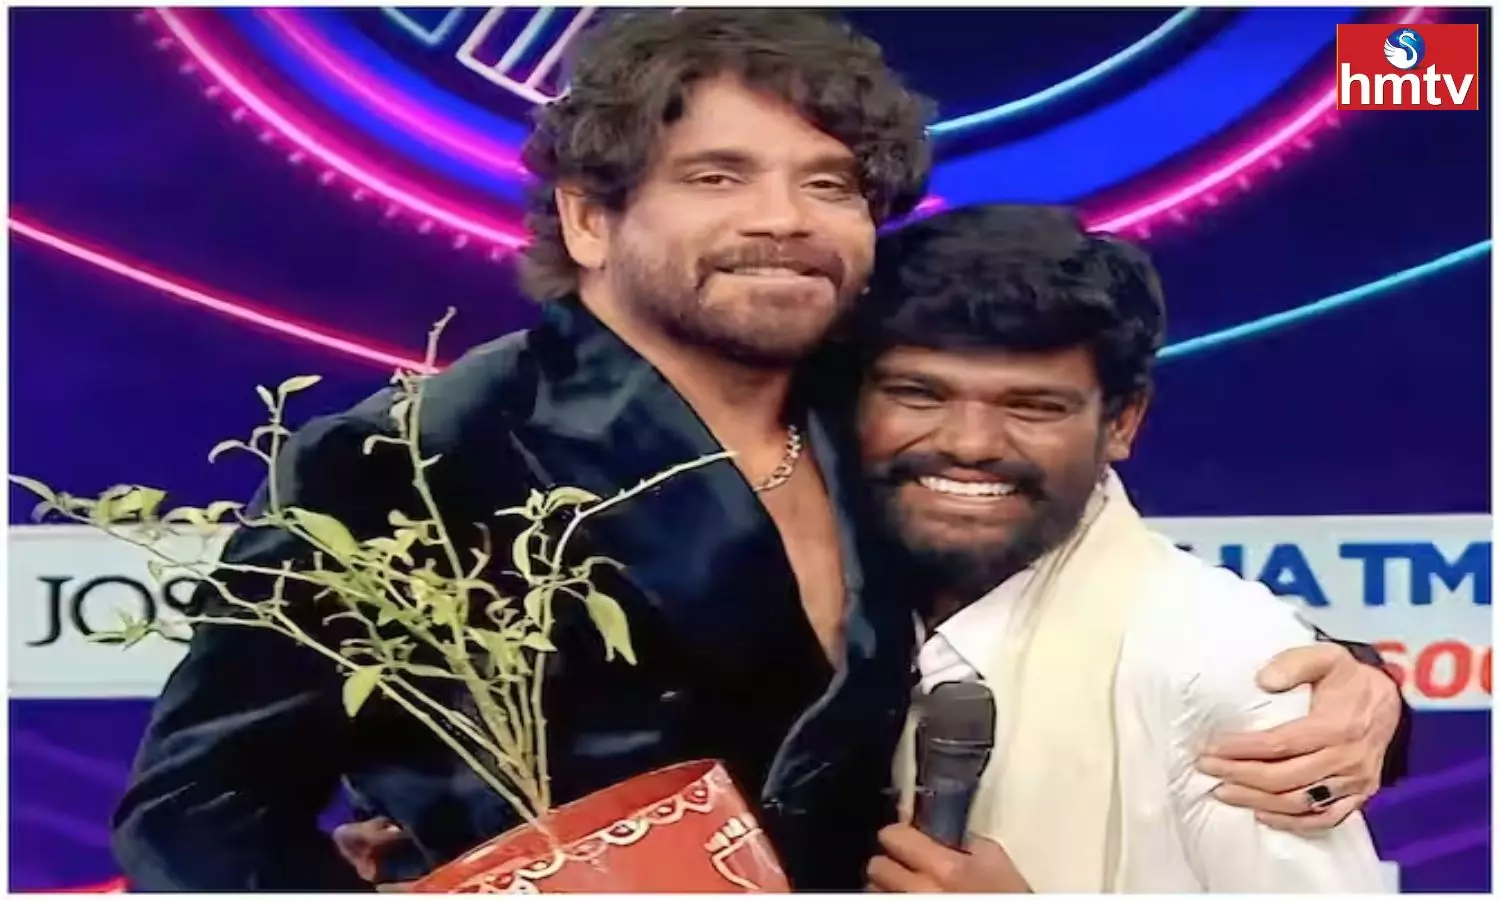 Pallavi Prashanth Winner for the Bigg Boss 7 Telugu Grand Finale Check Latest Updates and Prize Money Details